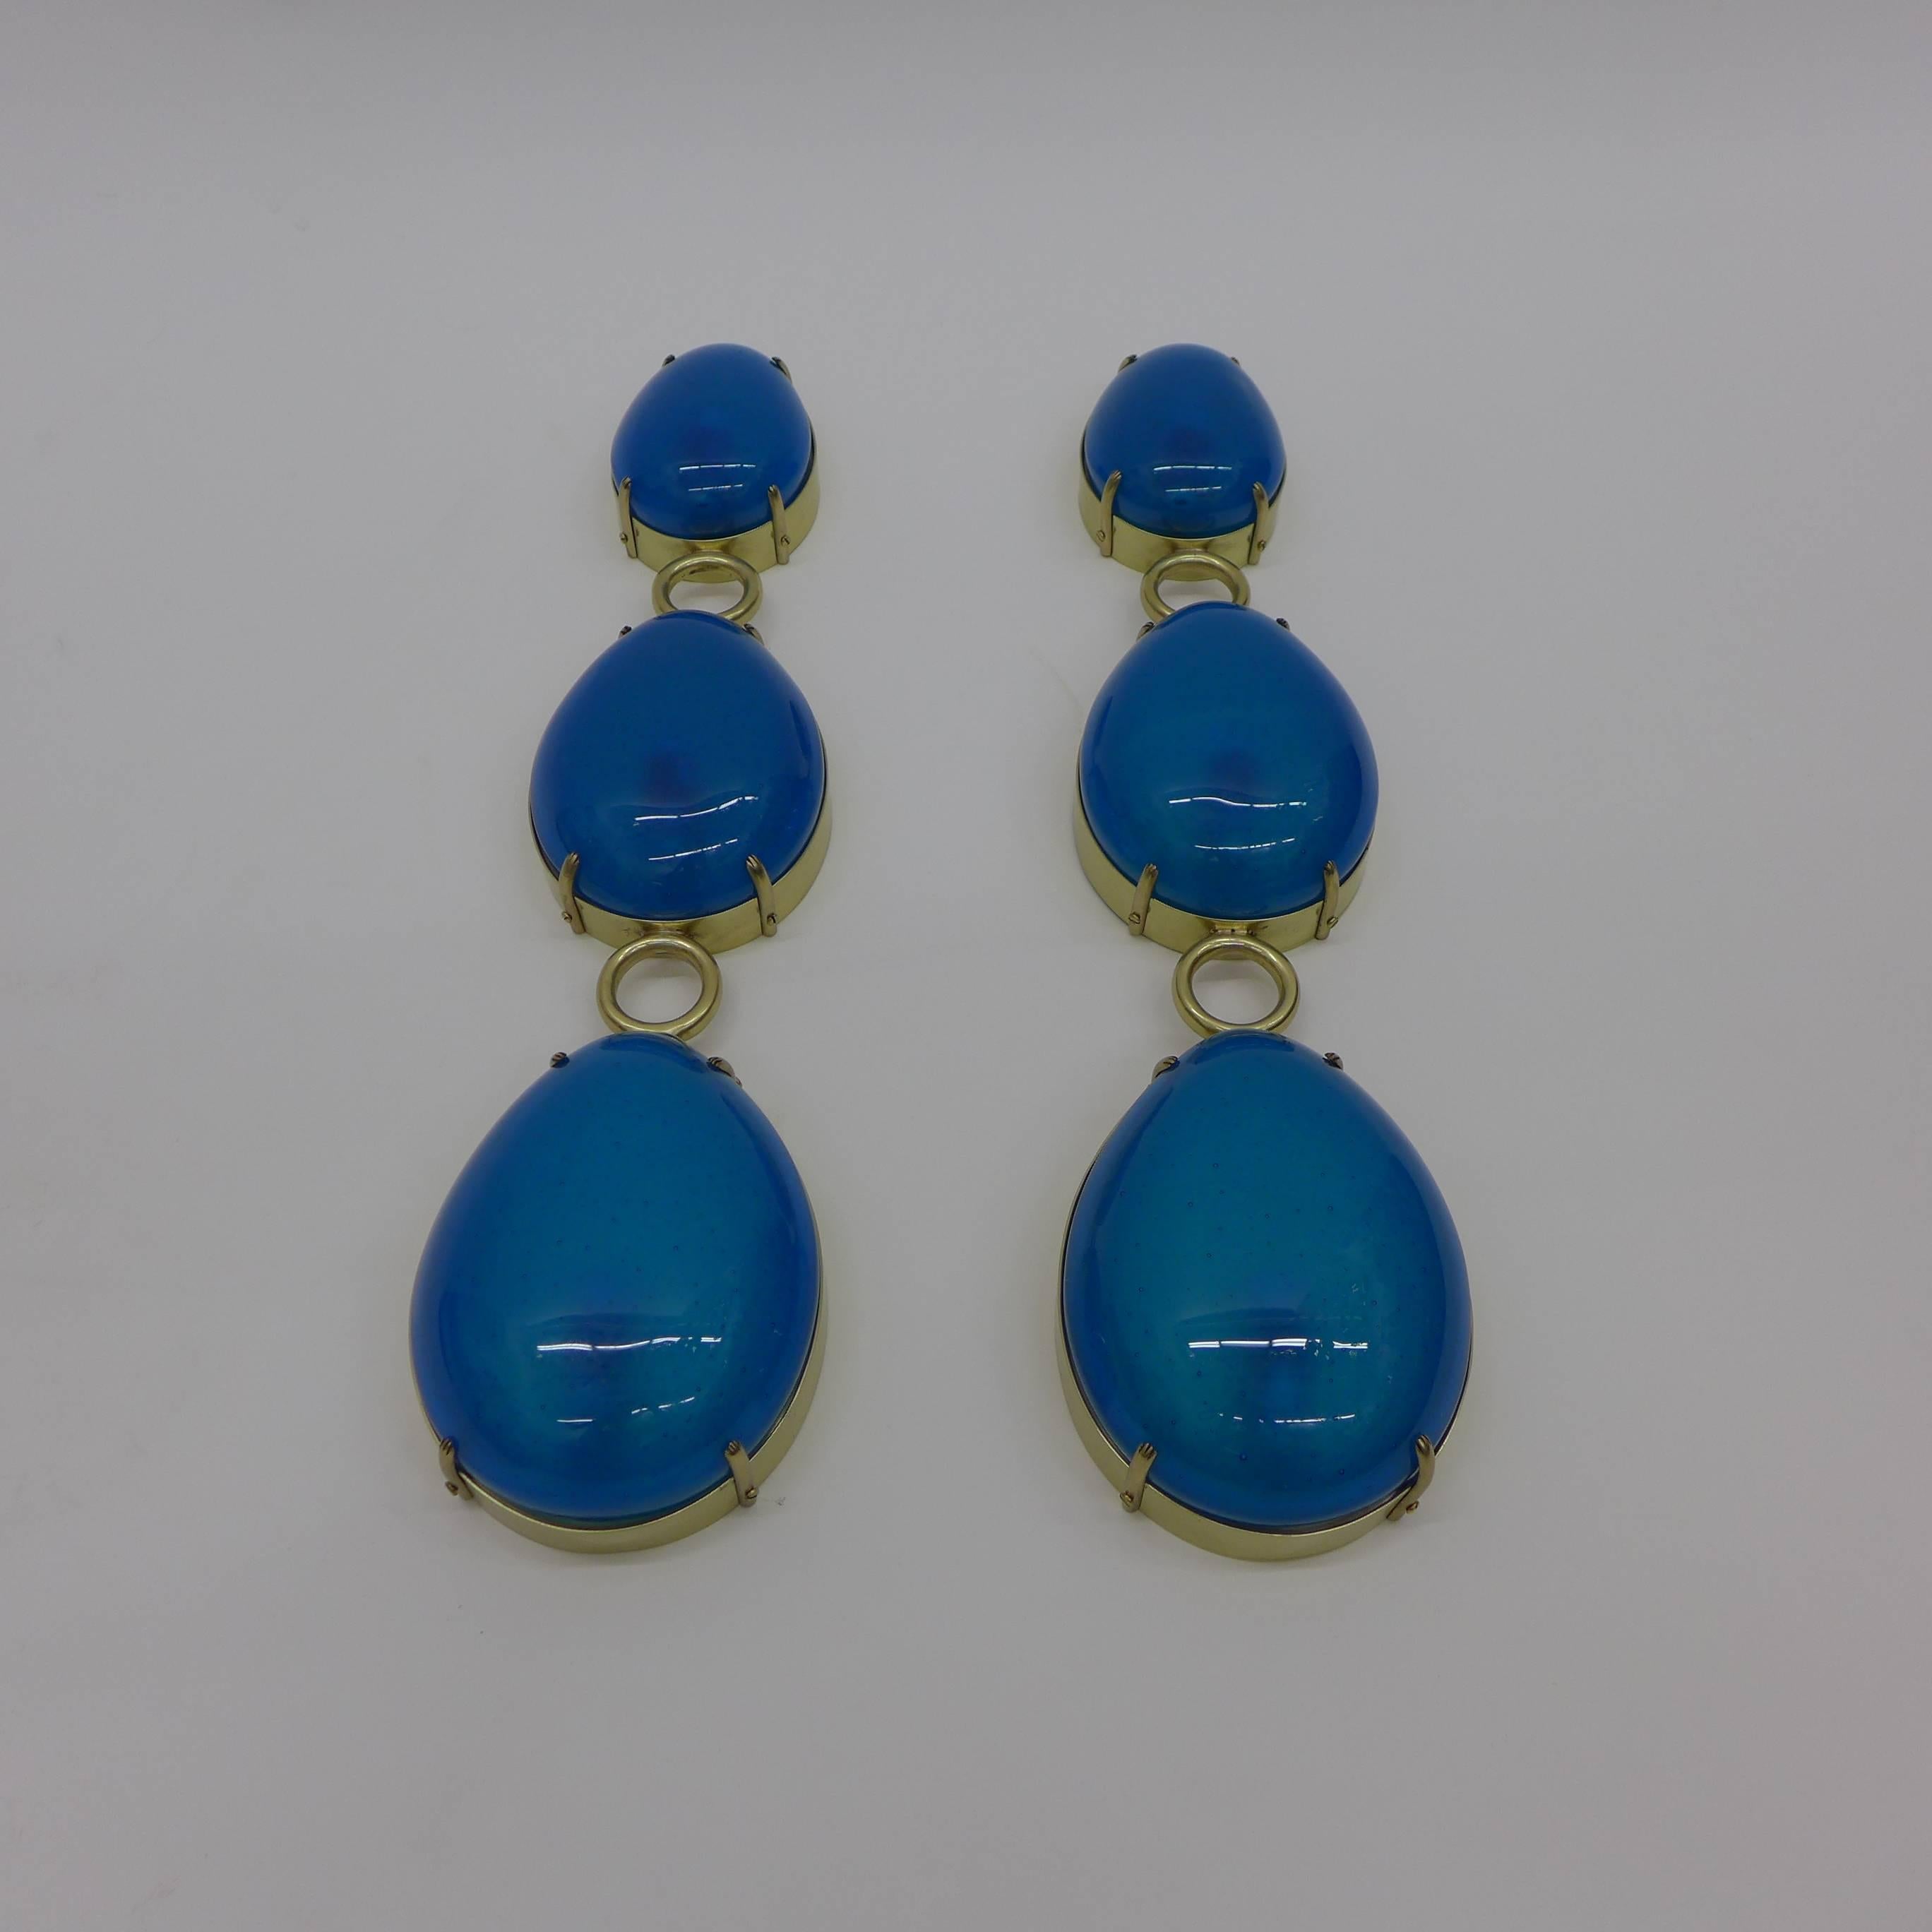 Handmade aquamarine glass and brass sconces.
Limited edition.
Capacity 3 x E12 25 Watts.
